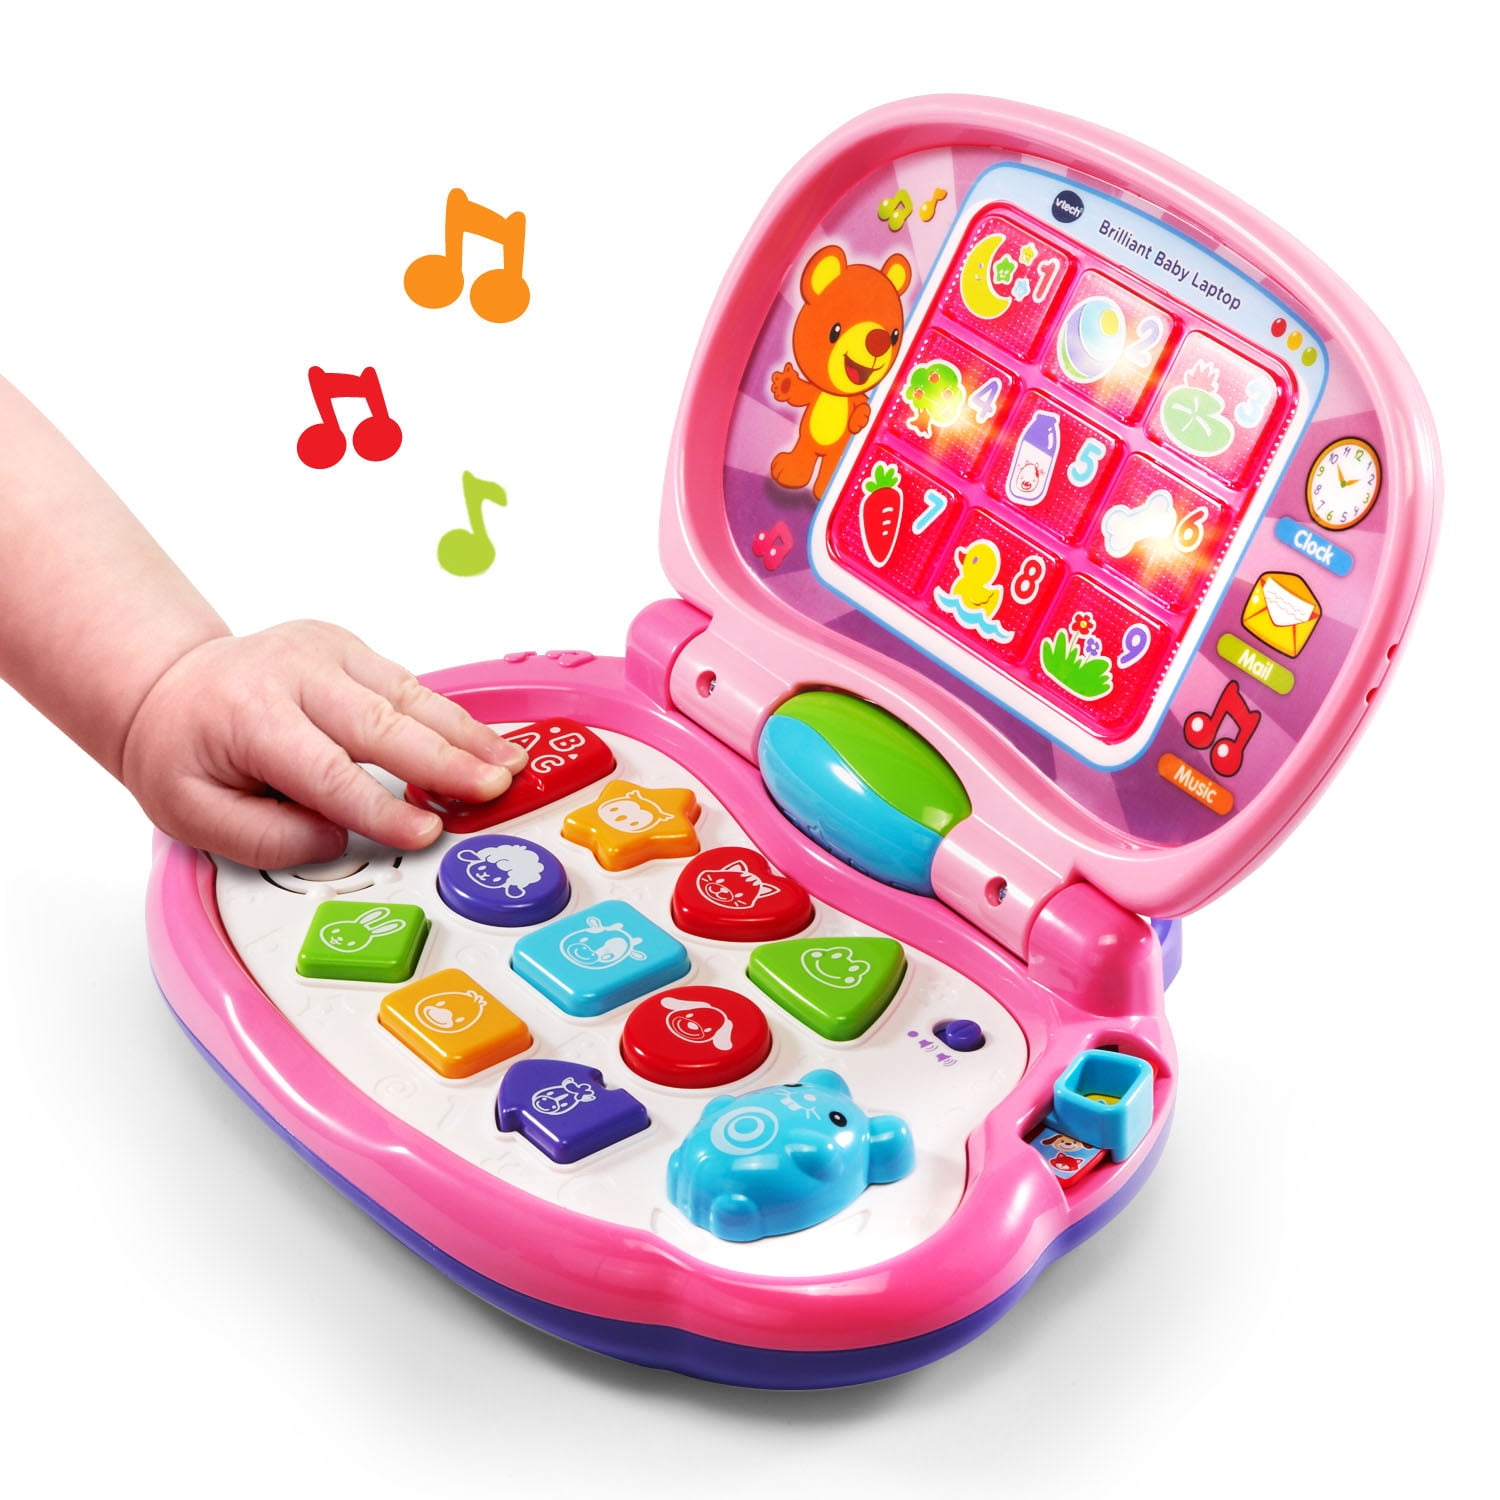  VTech Play Smart Preschool Laptop, Pink : Everything Else